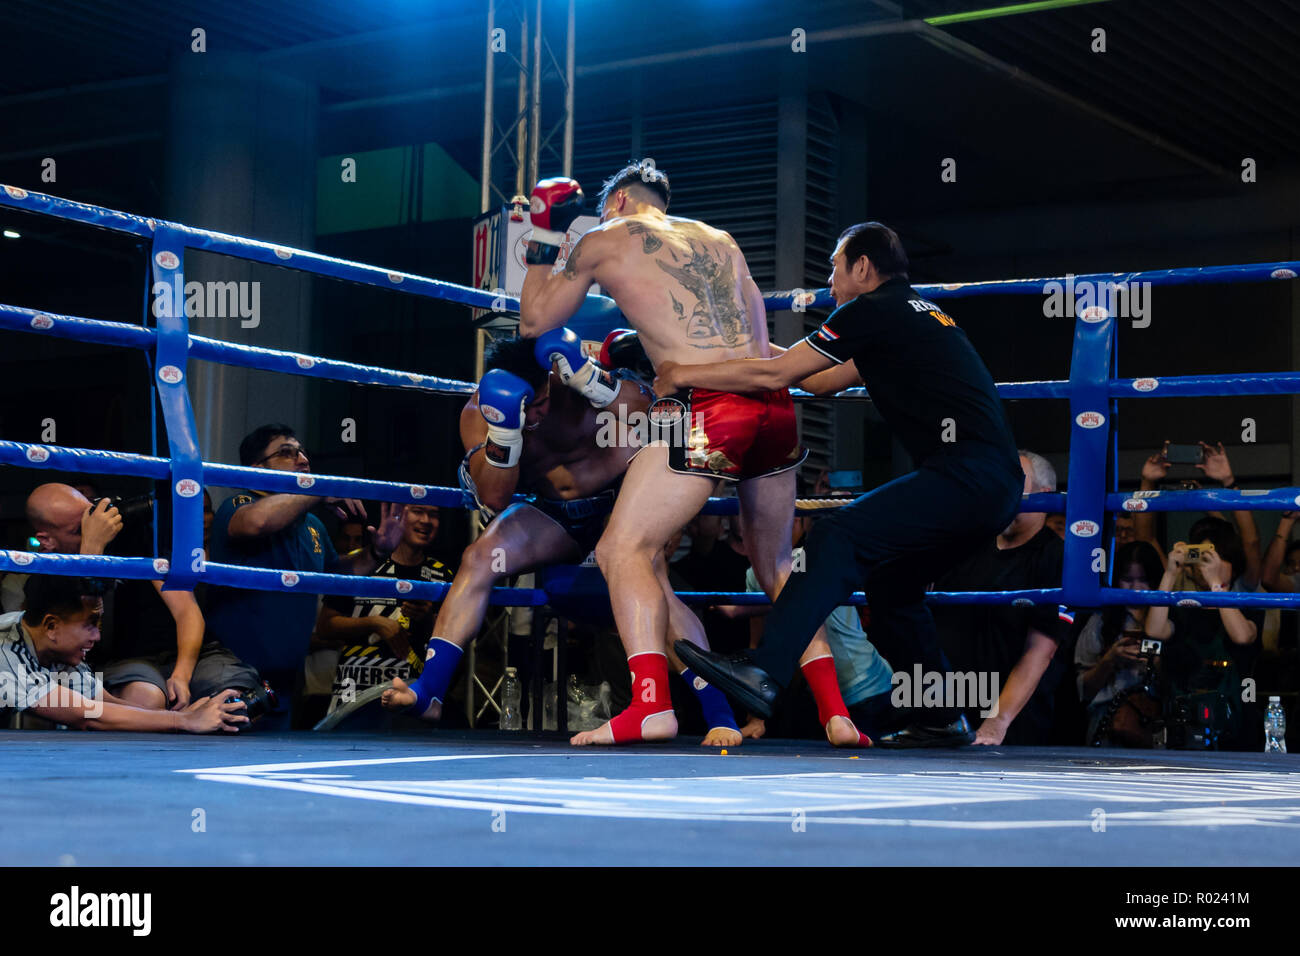 Bangkok, Tailandia - 31 Ottobre 2018: Bangkok Muay Thai combatte a MBK Centre. Foto Stock